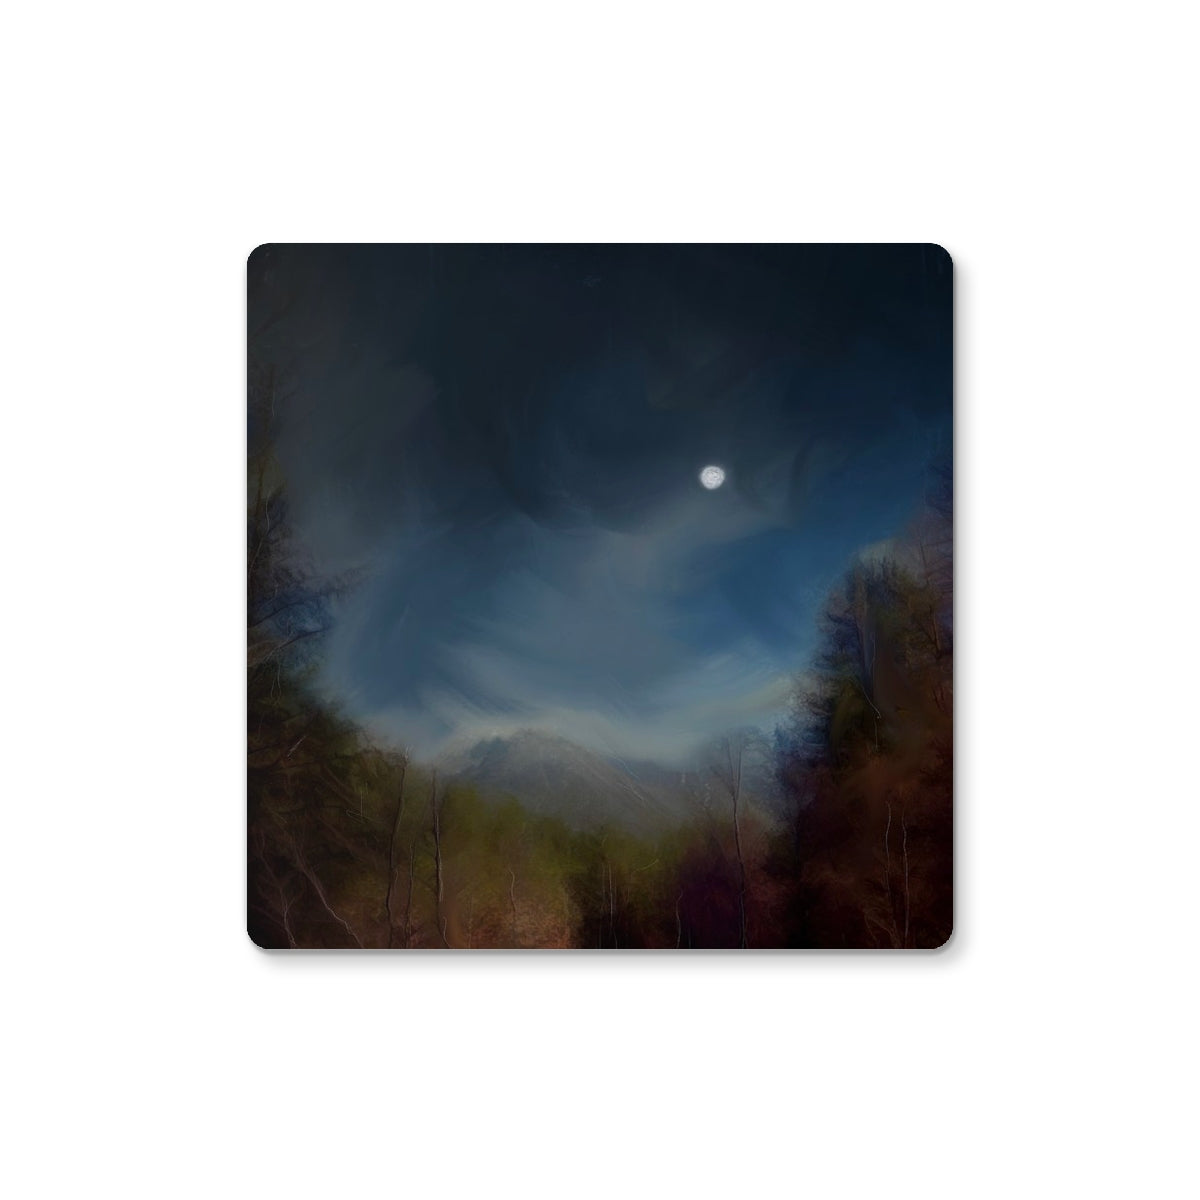 Glencoe Lochan Moonlight Art Gifts Coaster-Coasters-Scottish Lochs & Mountains Art Gallery-Single Coaster-Paintings, Prints, Homeware, Art Gifts From Scotland By Scottish Artist Kevin Hunter